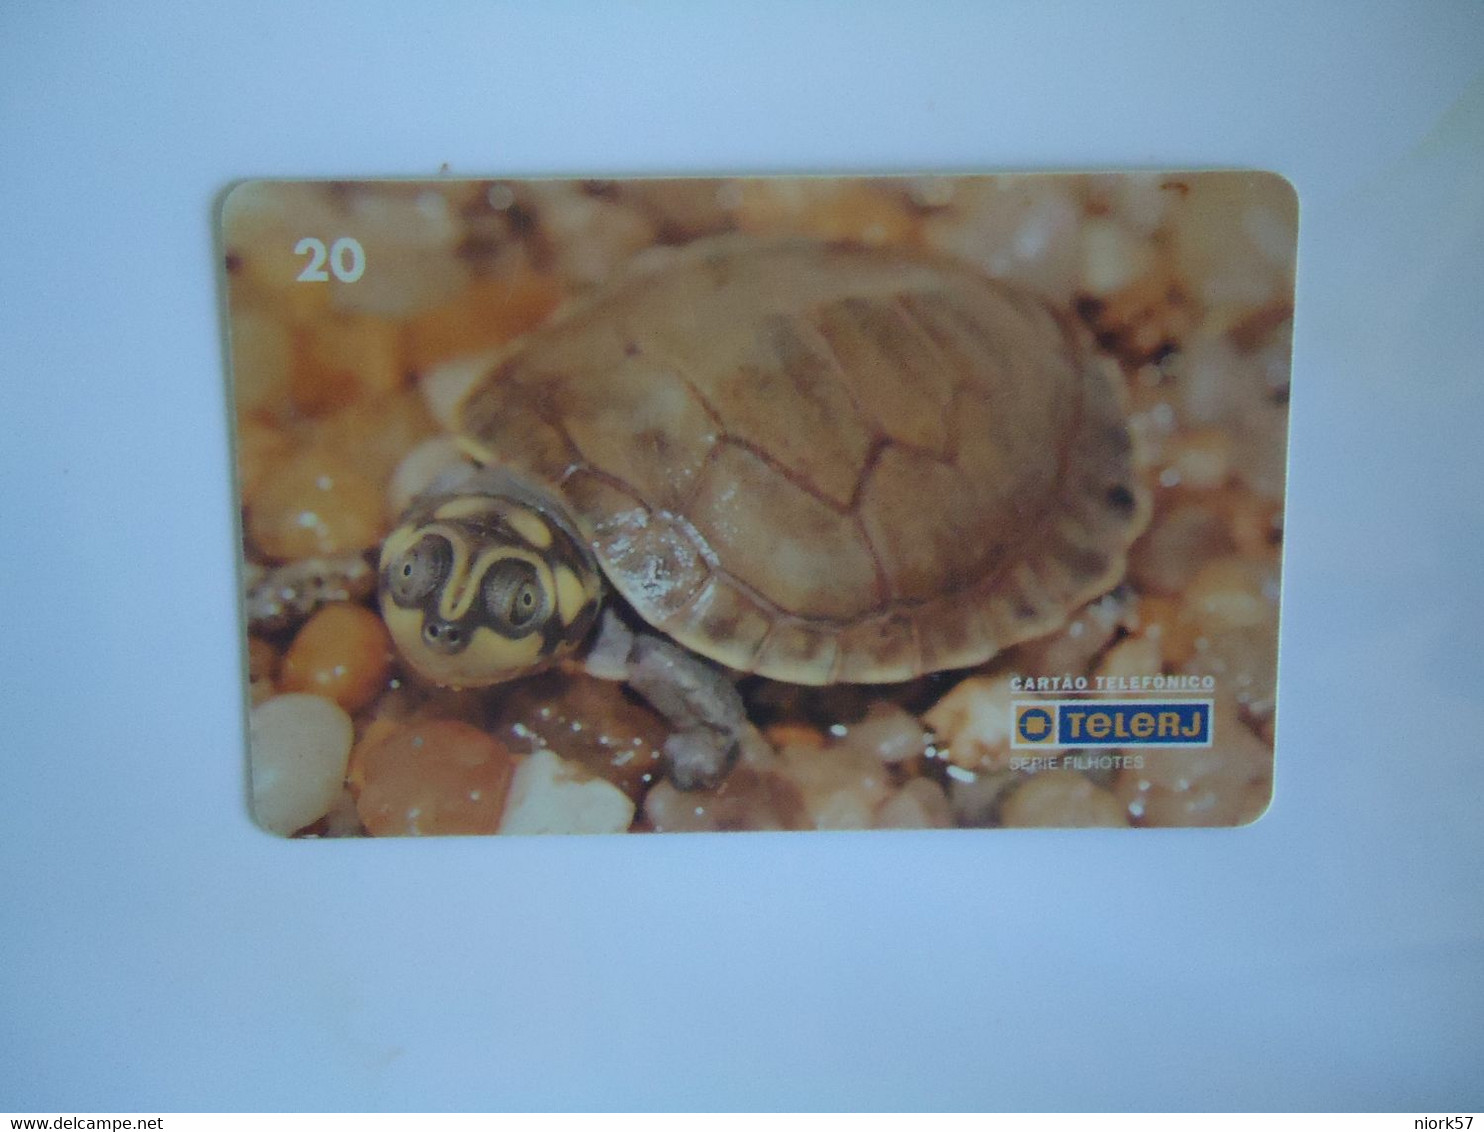 BRAZIL USED CARDS ANIMALS TURTLES - Tortugas